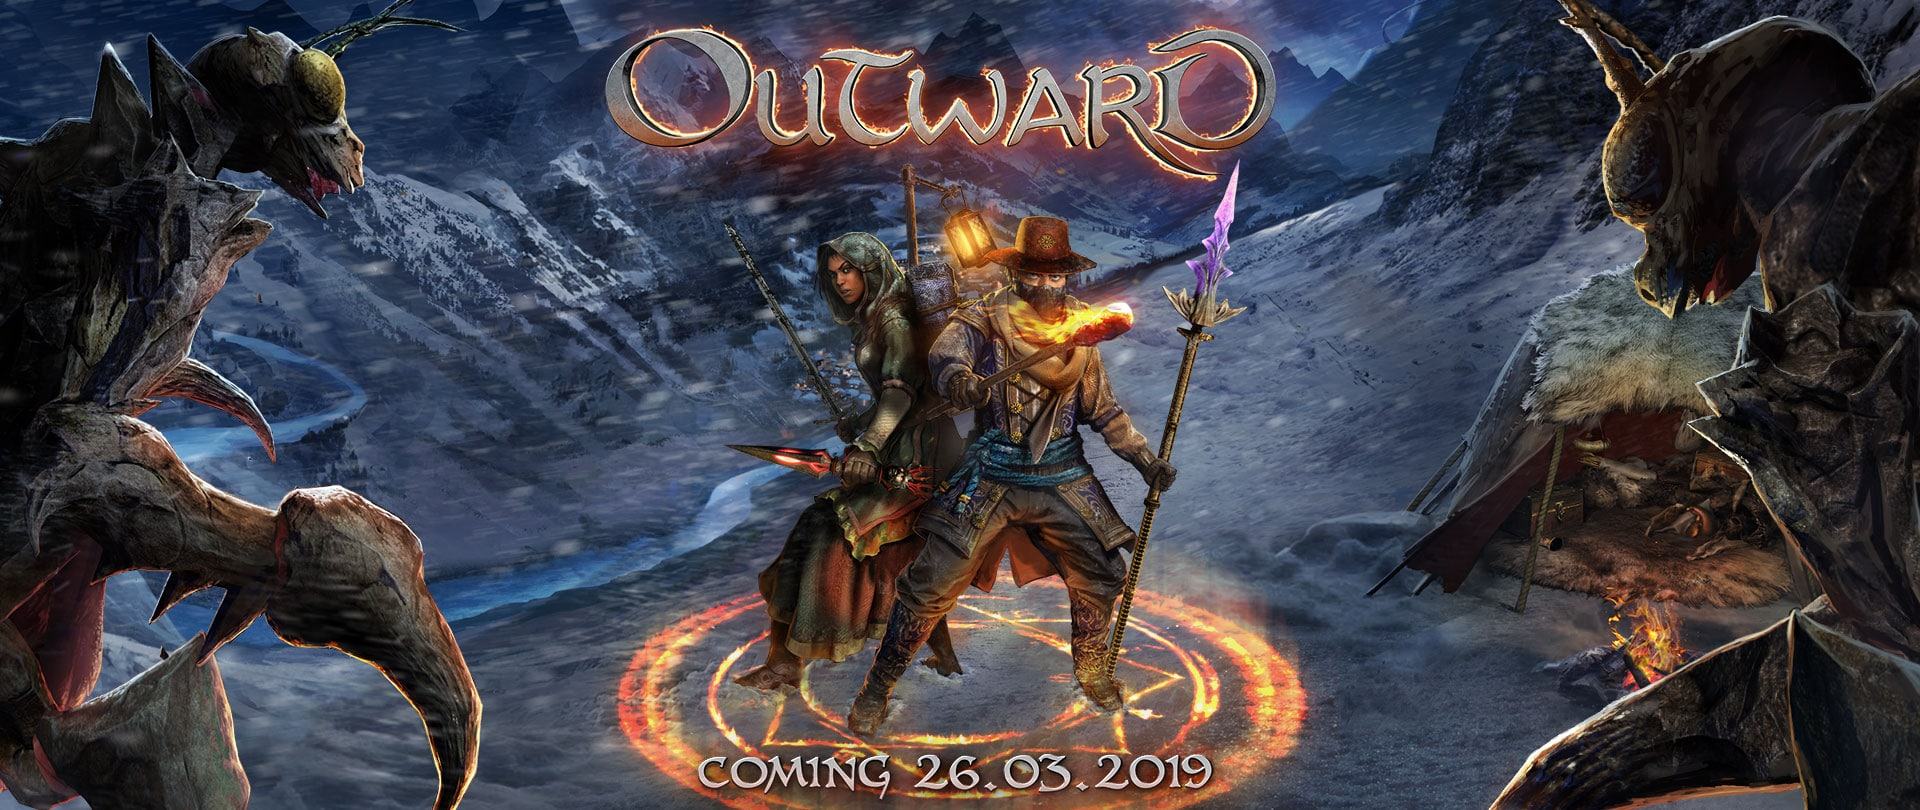 Outward Steam PC download trailer prezzo video gameplay nuovo RPG Open World Online Deep Silver